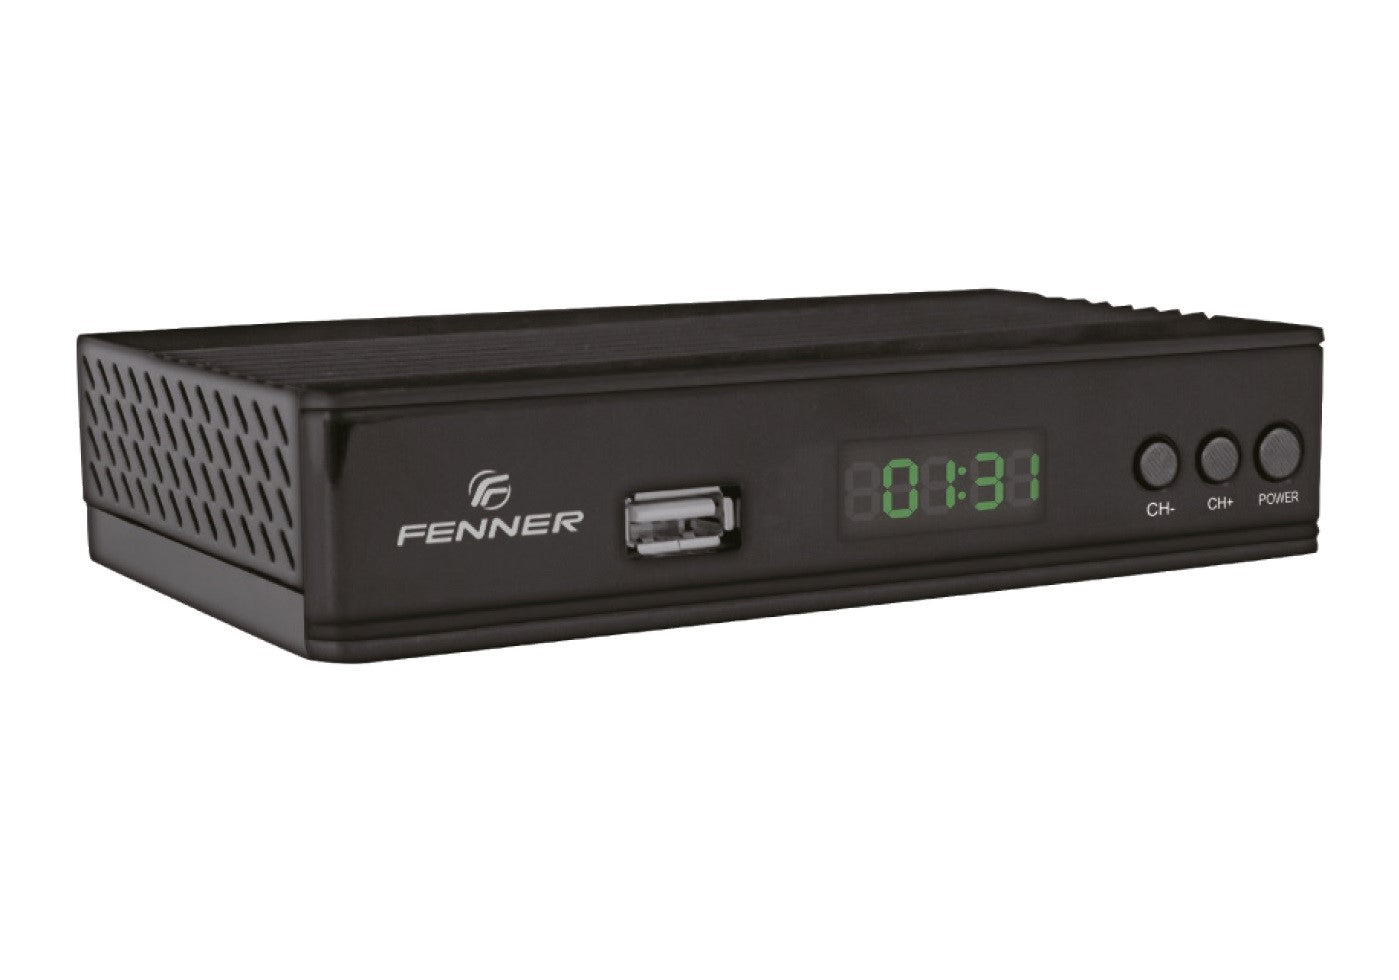 Fenner Tech Decoder FN-GX2 HD DVB-T2/HEVC USB 2.0 Telec.2in1